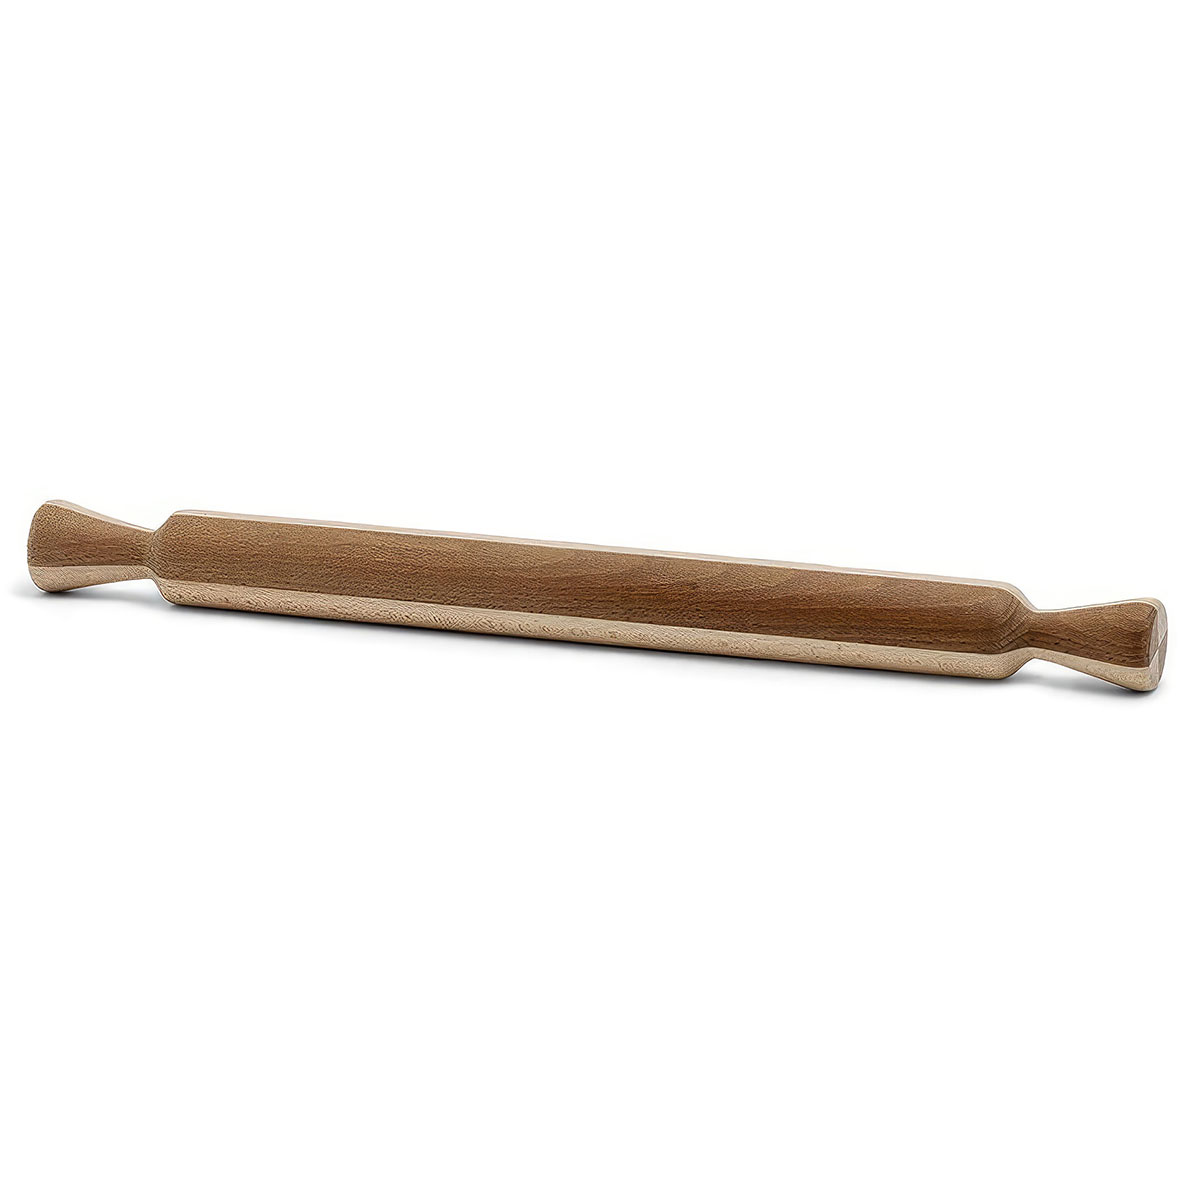 Скалка Luchetti K360 скалка деревянная бук 30 см